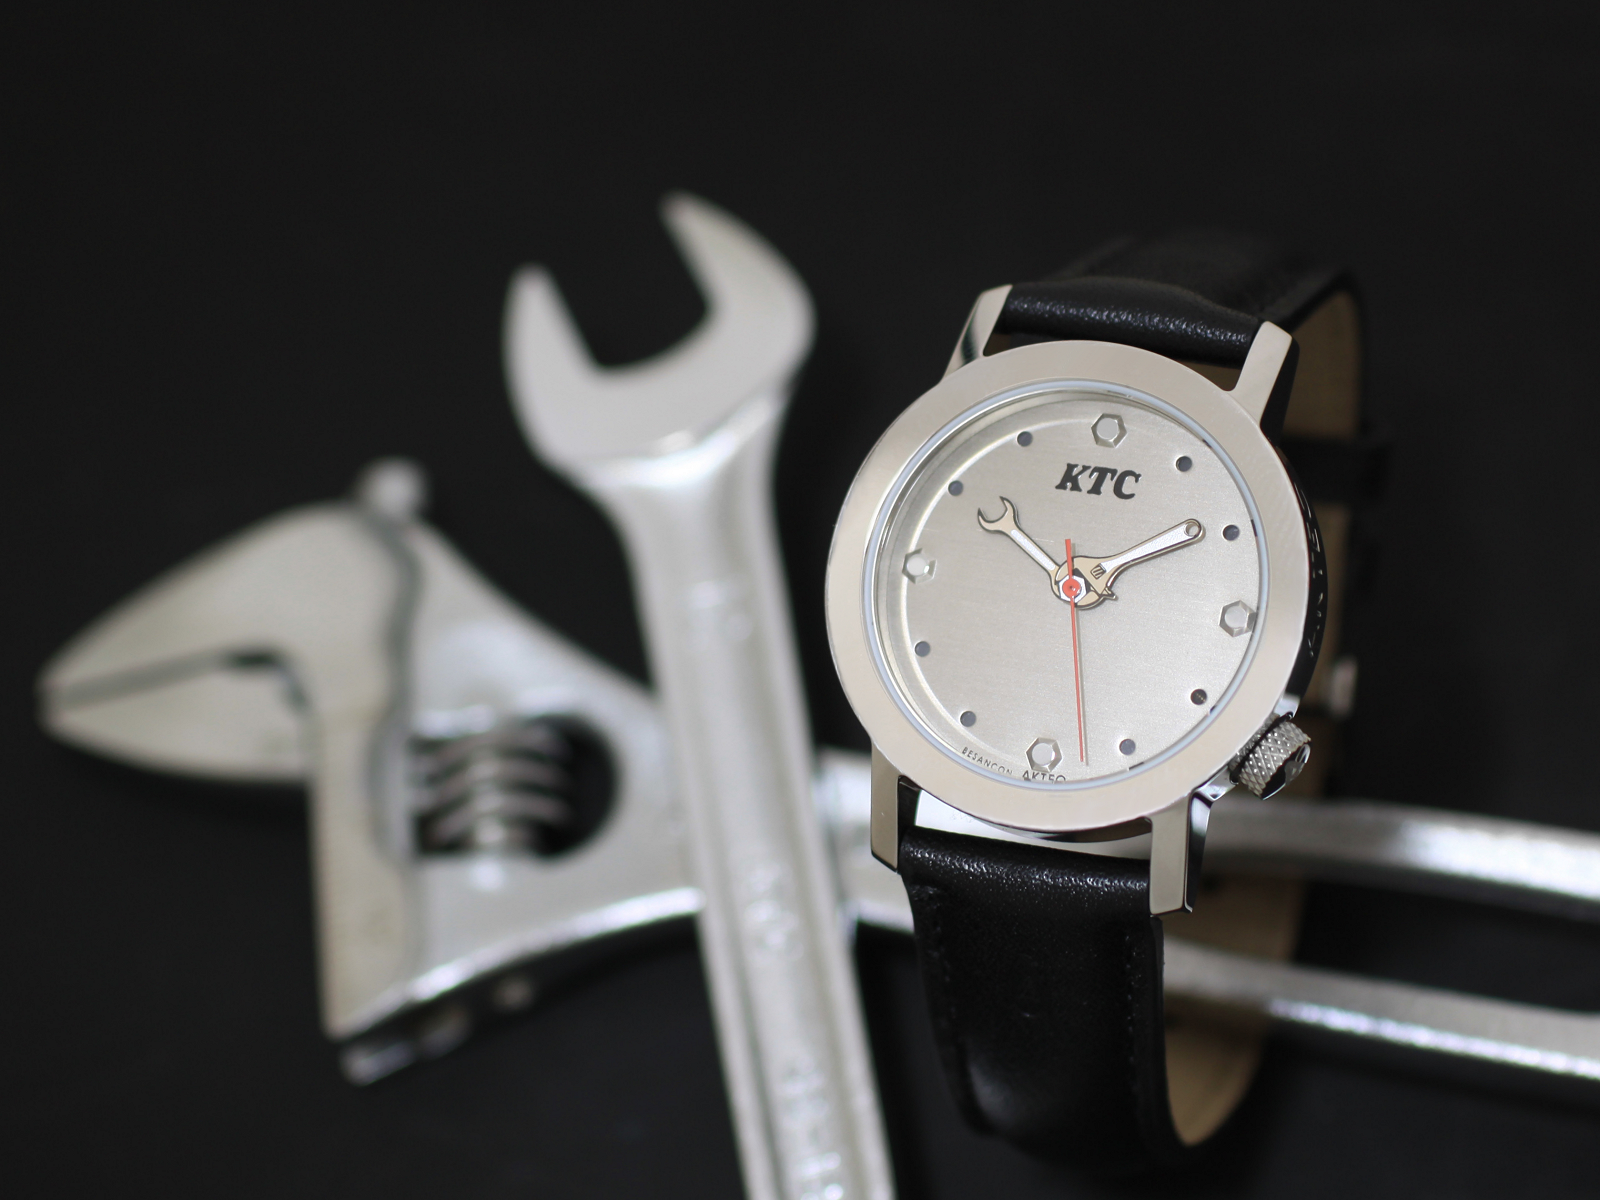 KTCオフィシャルグッズ「KTCオリジナル腕時計」YG-135 新発売 | KTCツールオフィシャルサイト